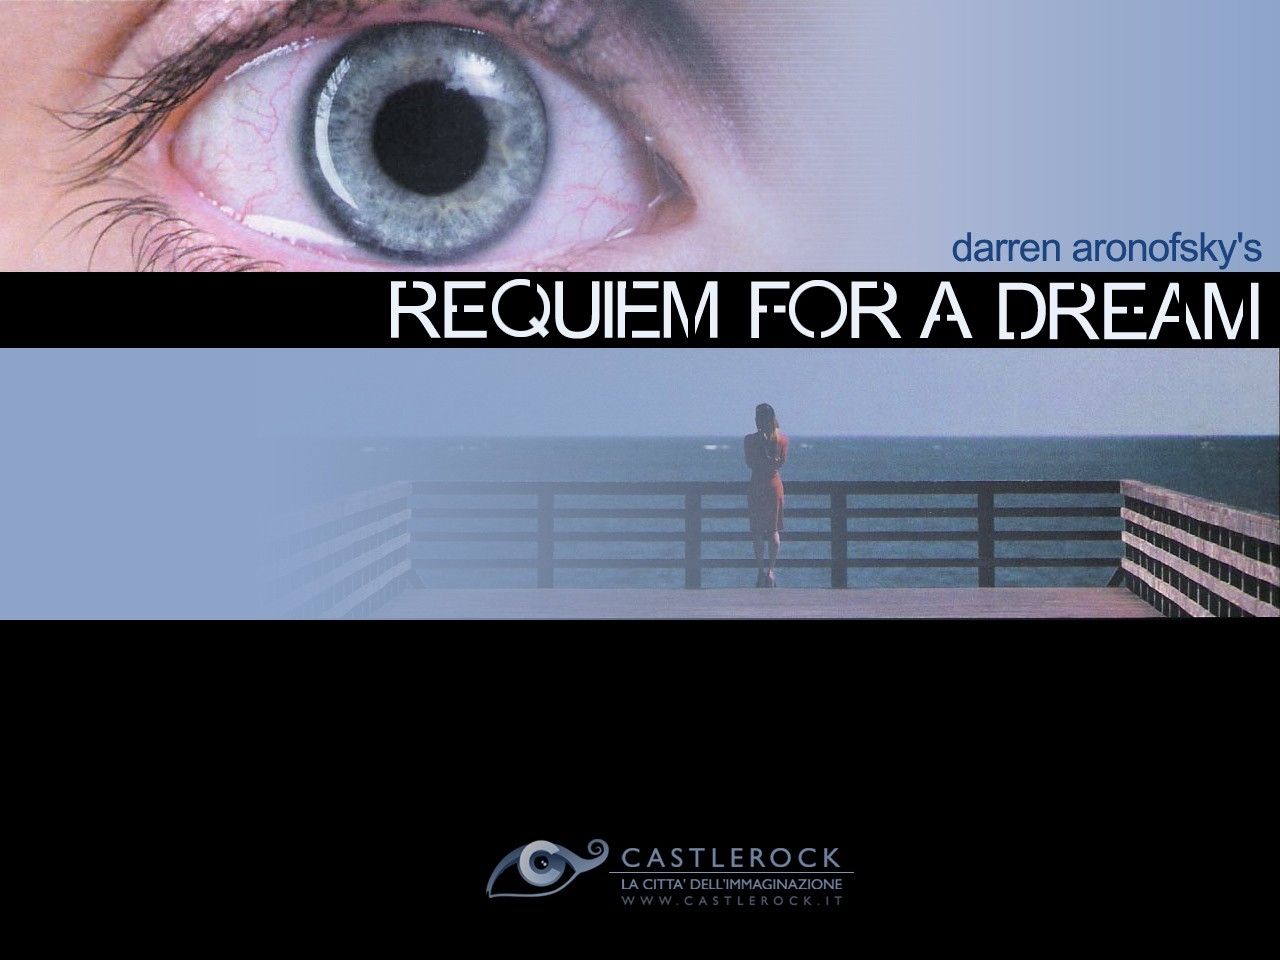 Requiem for a dream wallpaper hd normal